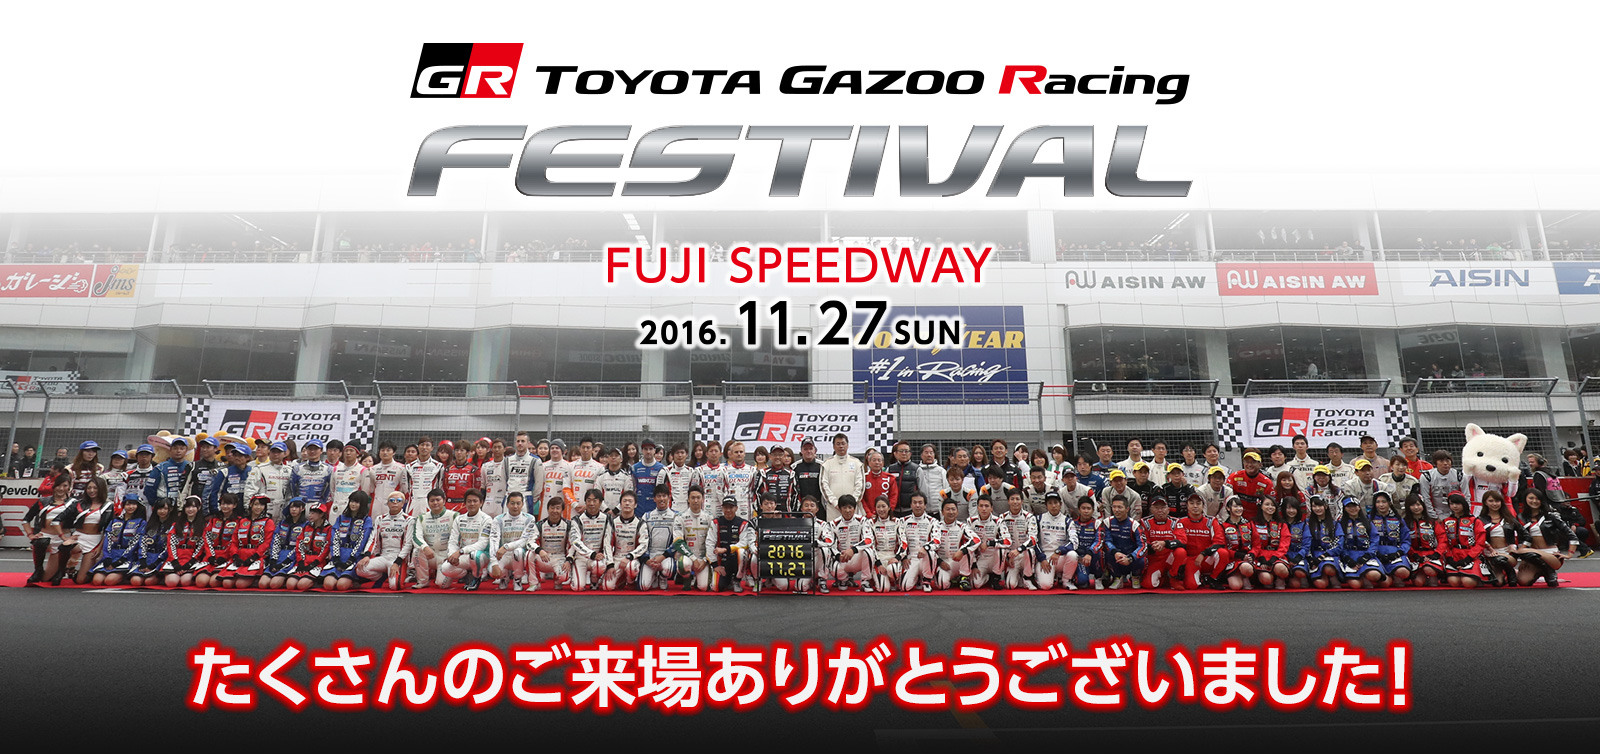 TOYOTA GAZOO Racing FESTIVAL - 2016.11.27 FUJI SPEEDWAY